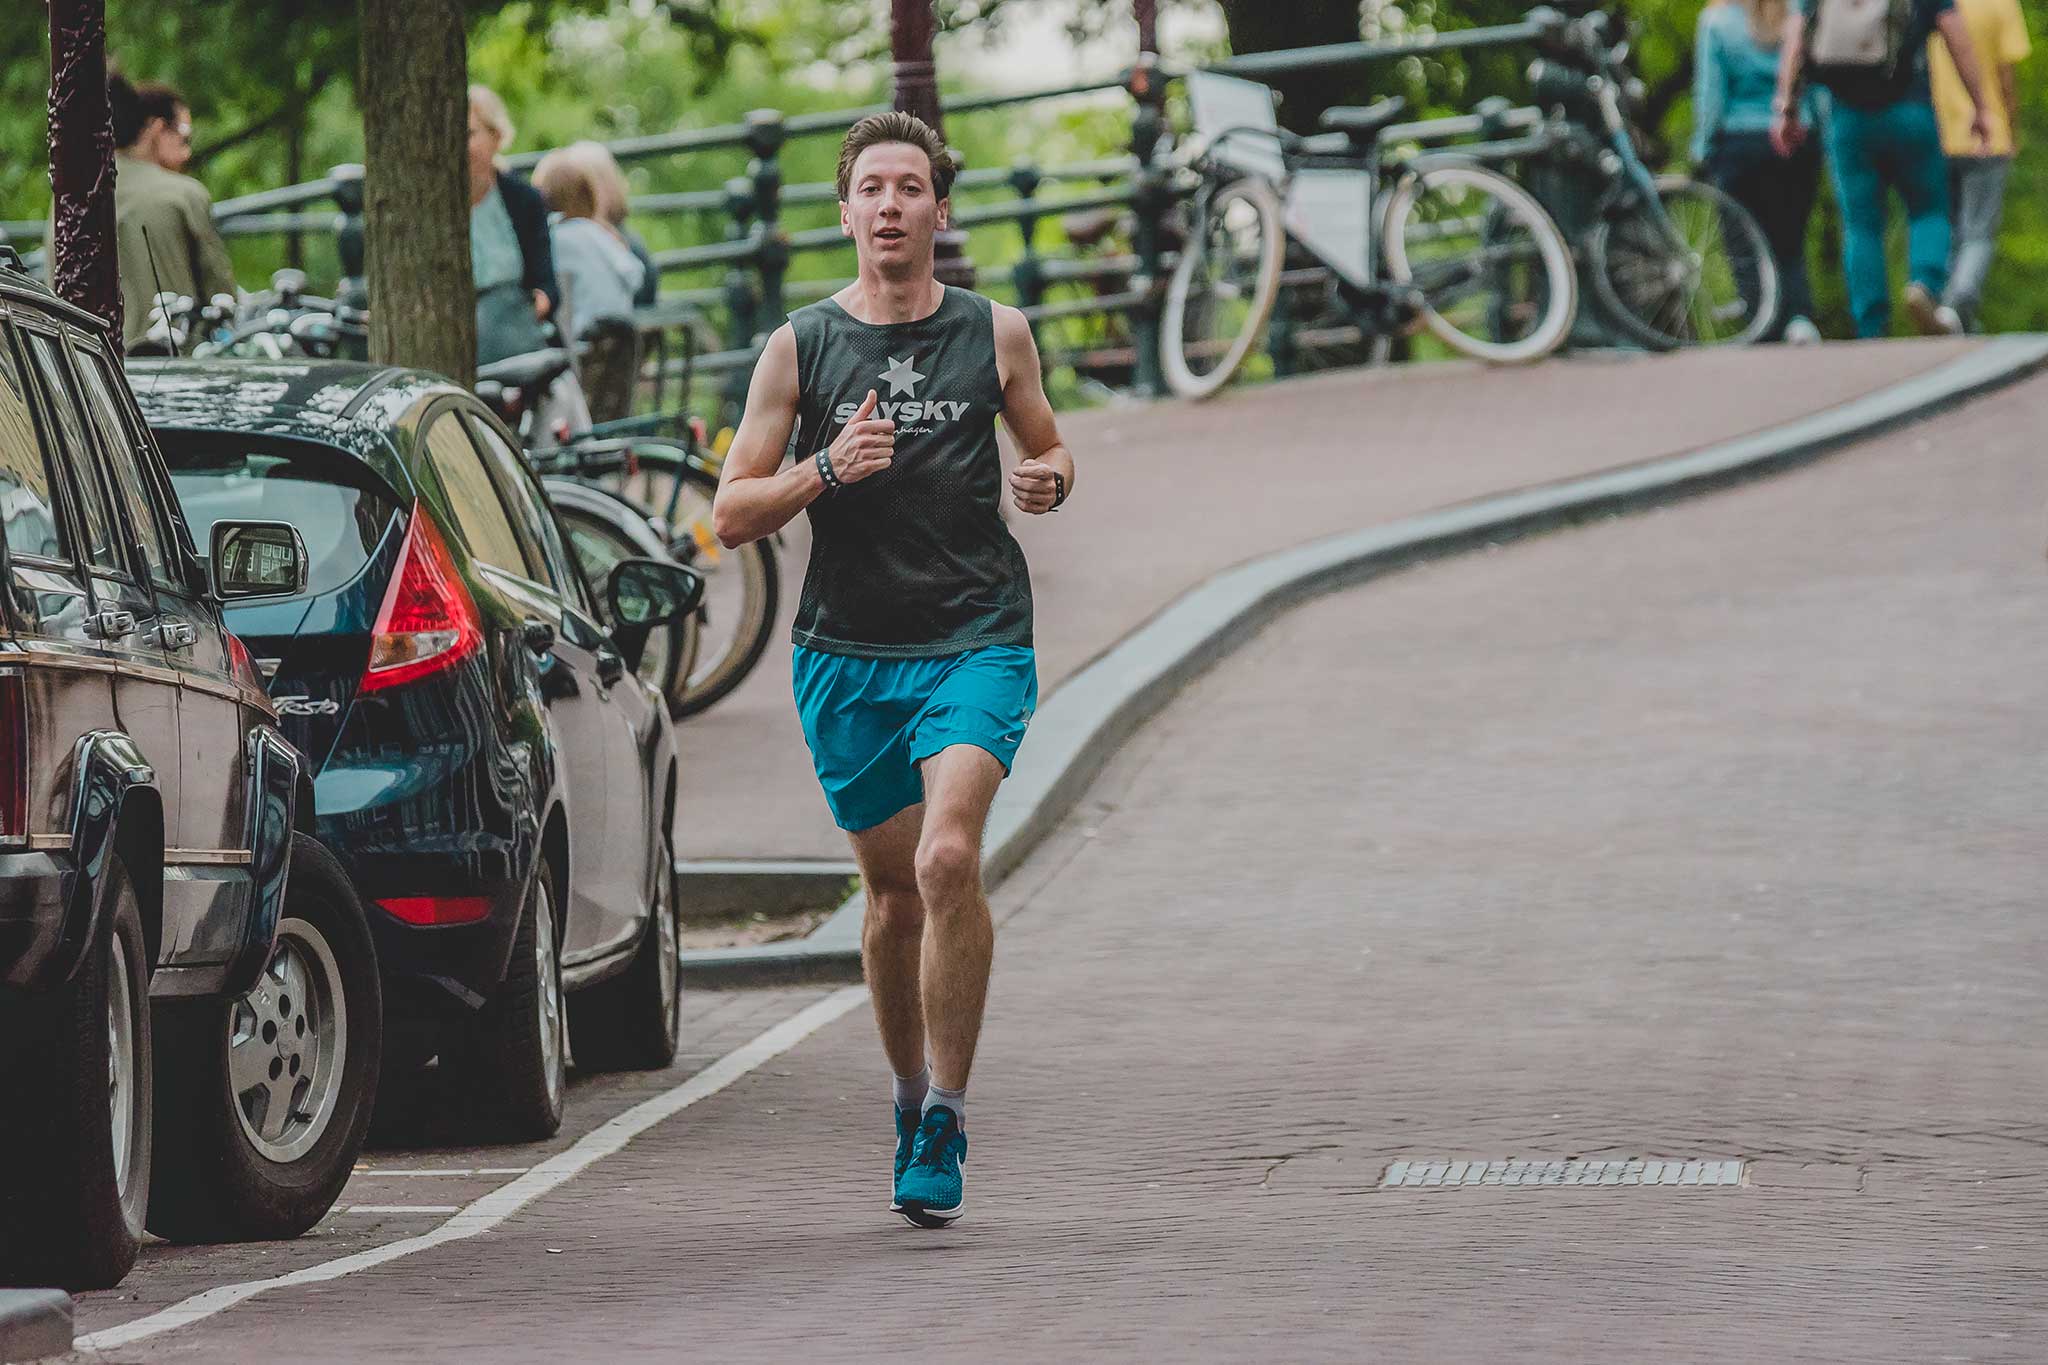 Where to run in Amsterdam SAYSKY running guide